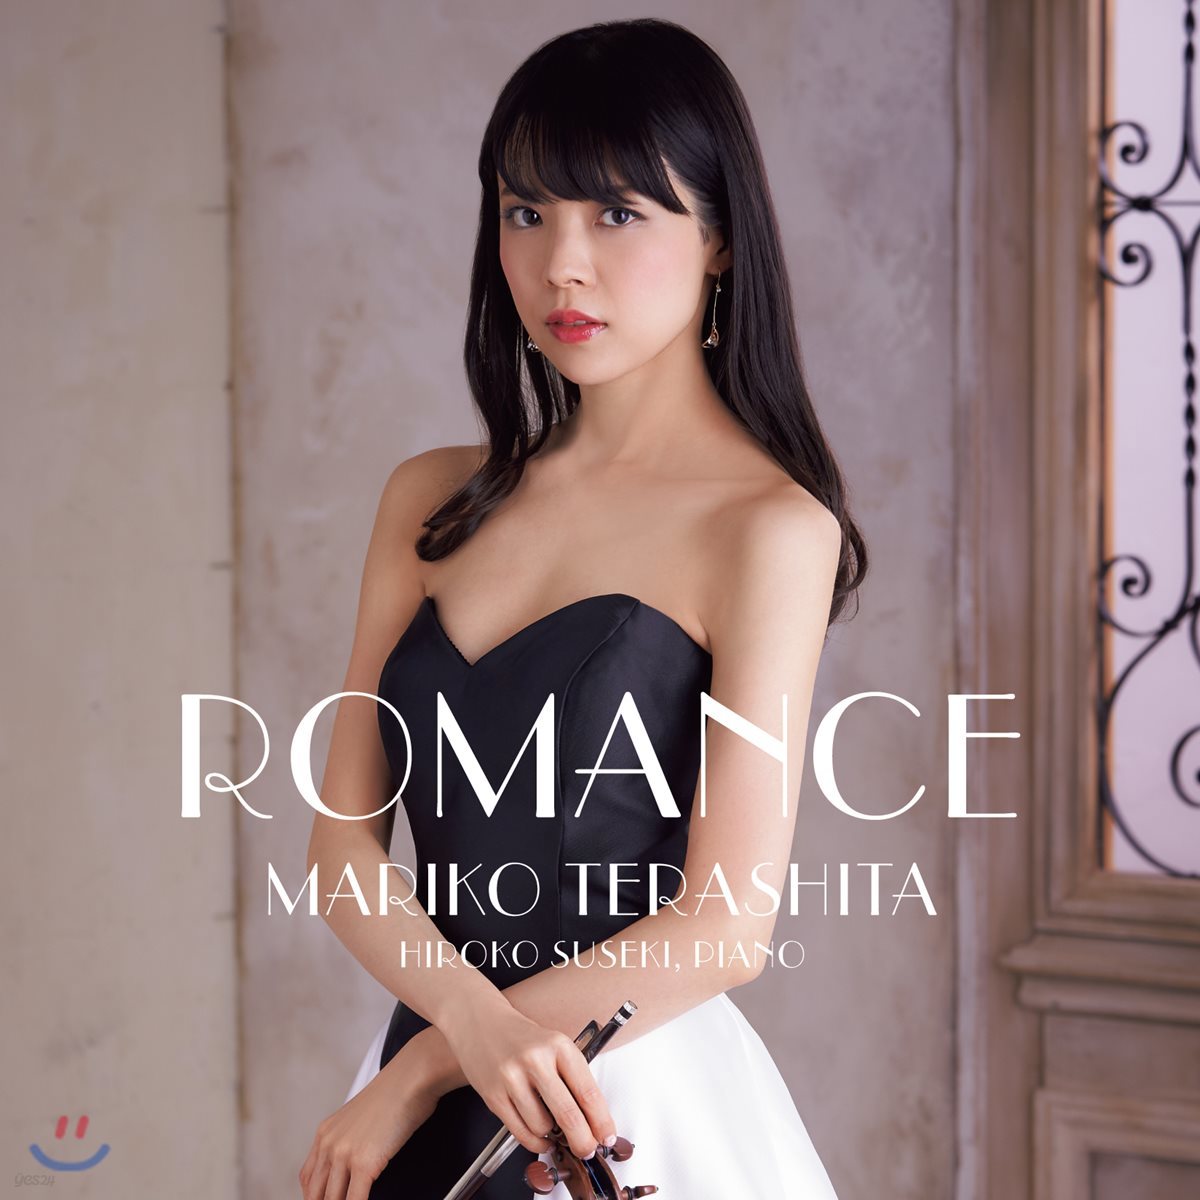 Terashita Mariko 테라시타 마리코 - 로망스 (Romance)